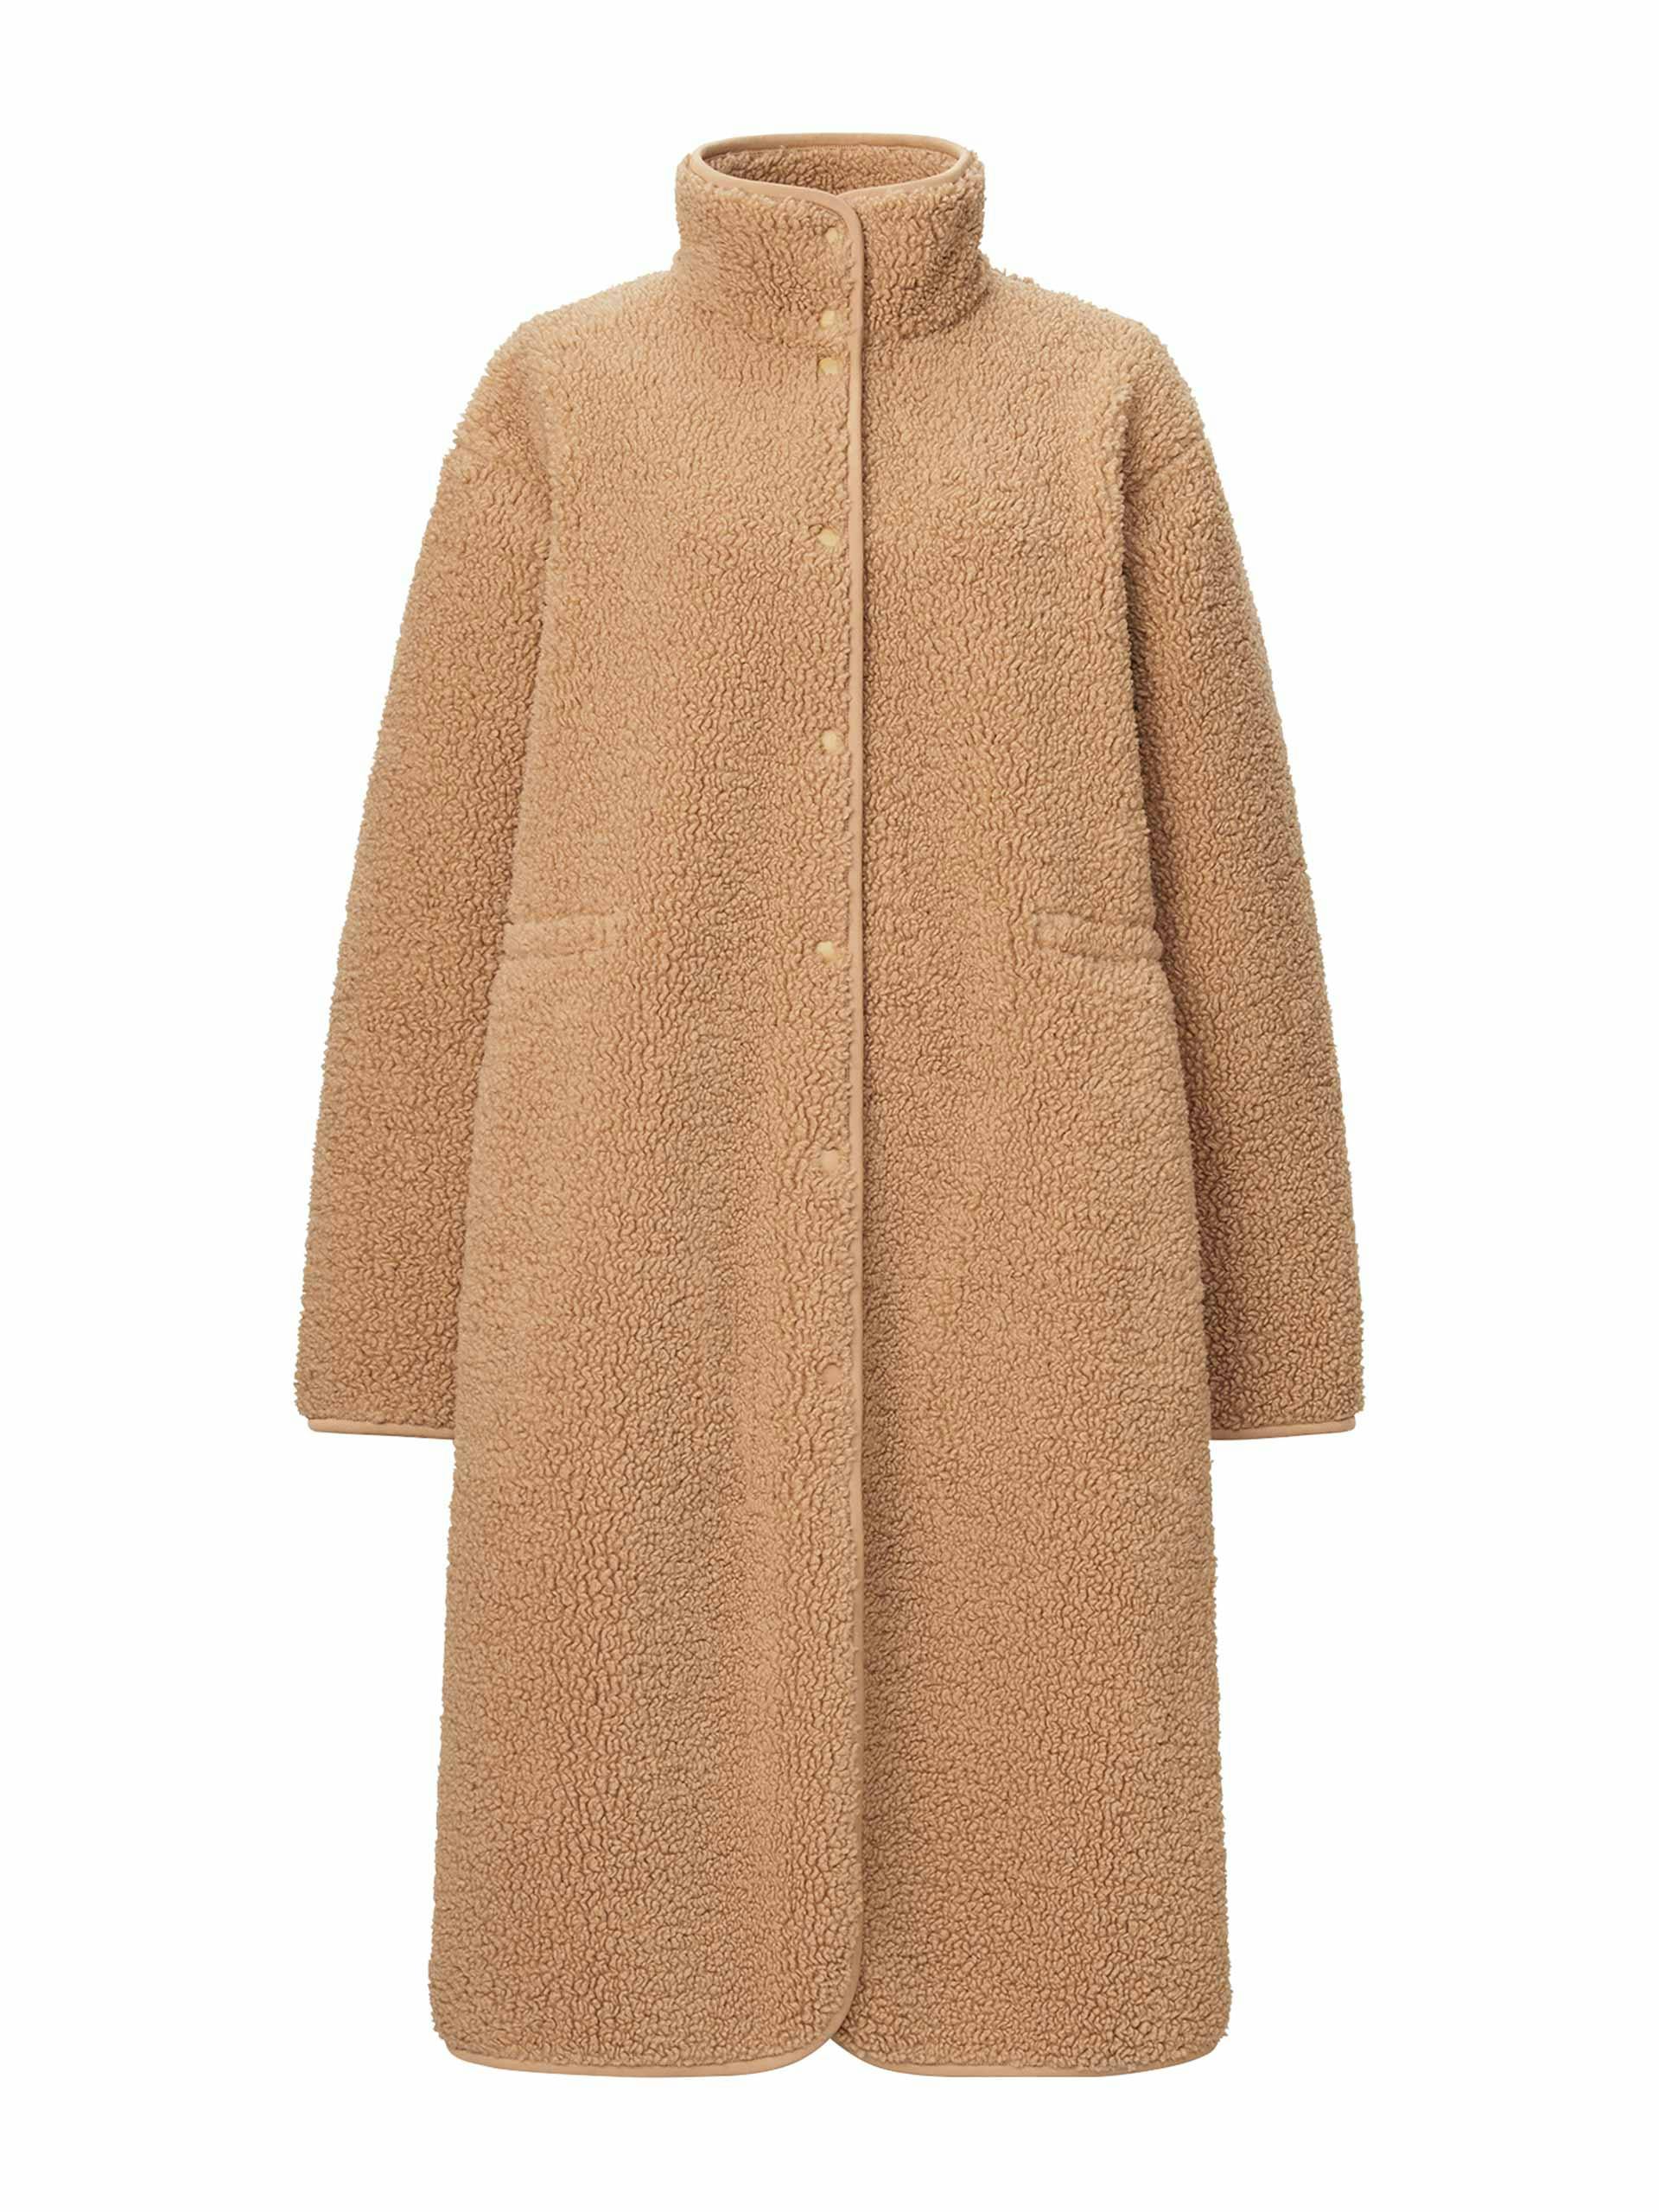 Pile-lined fleece coat